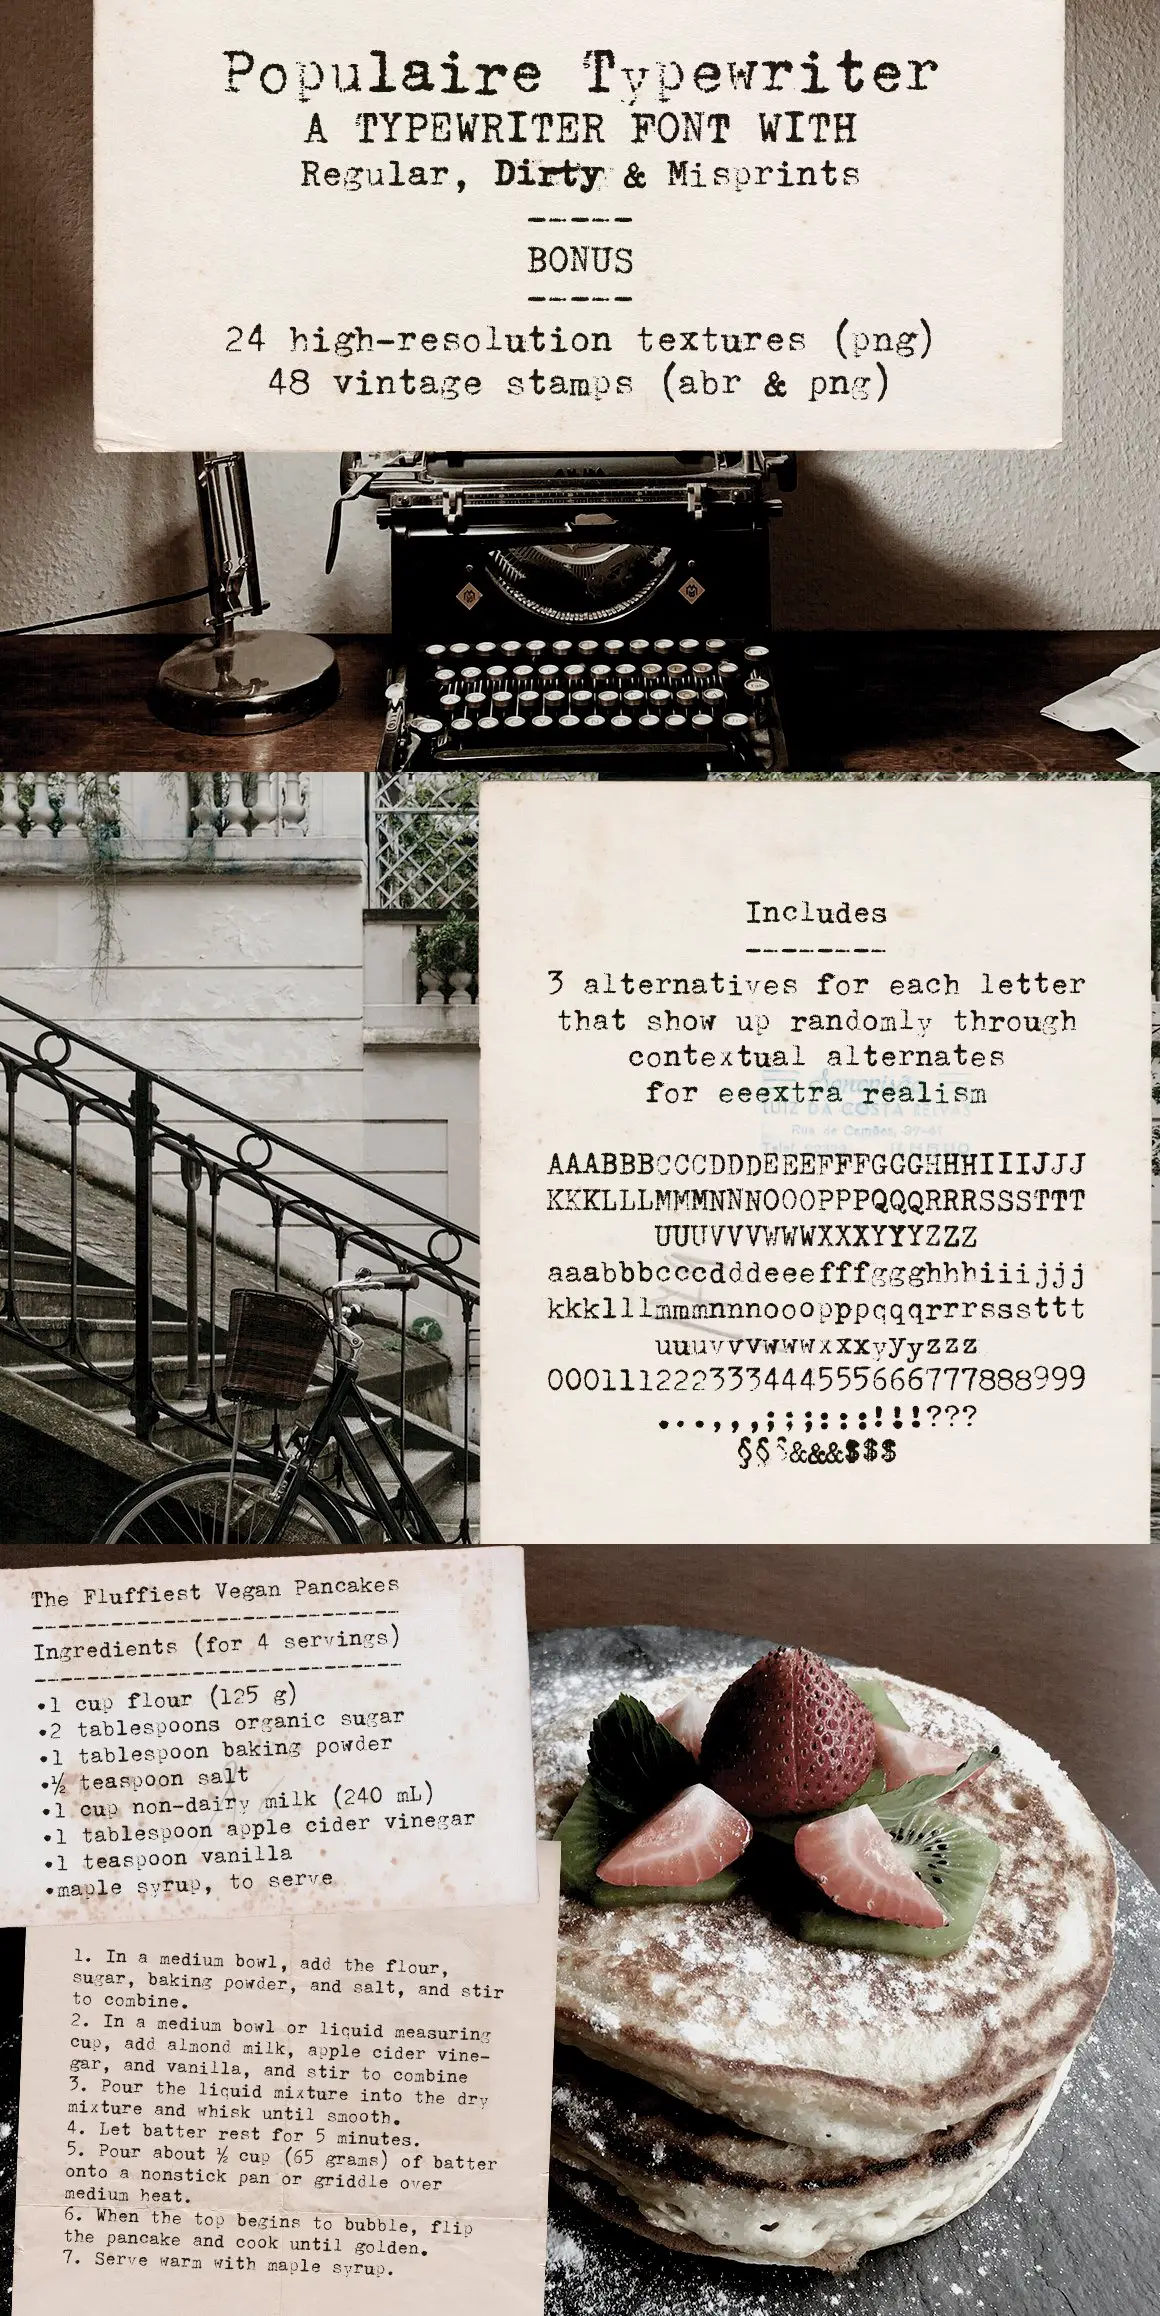 Populaire Typewriter - 